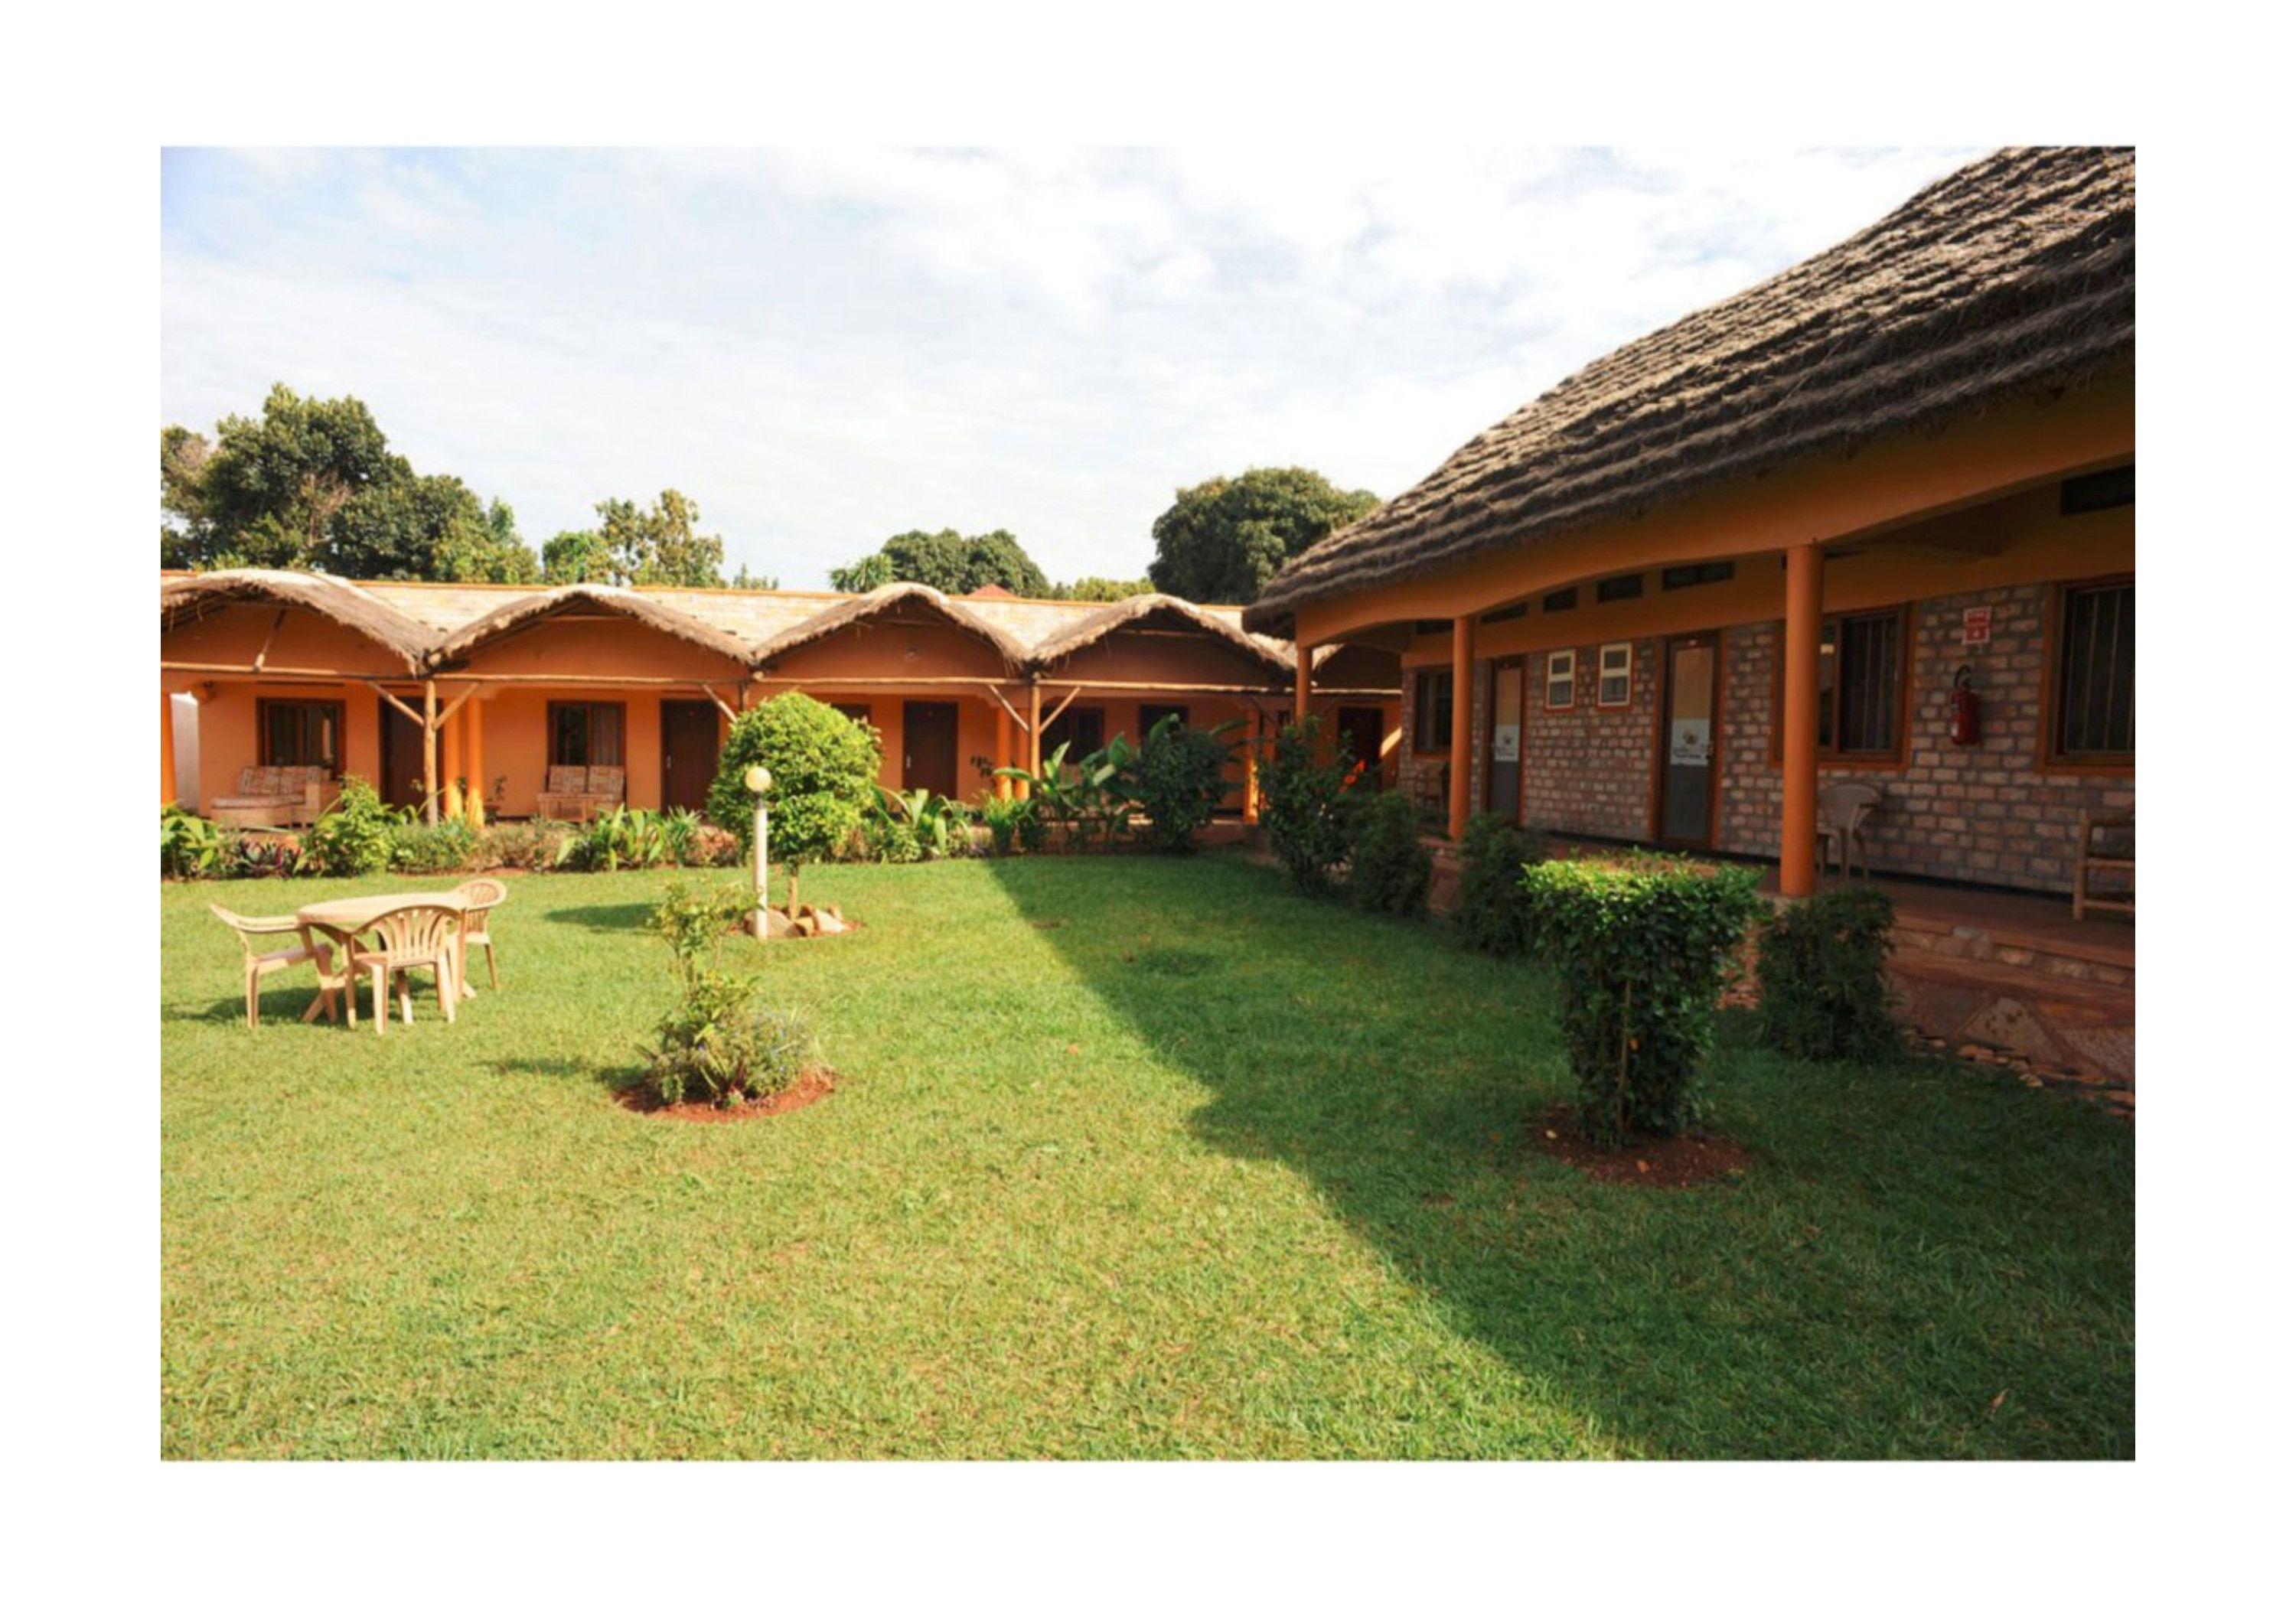 Gorilla African Guest House in Entebbe, Uganda